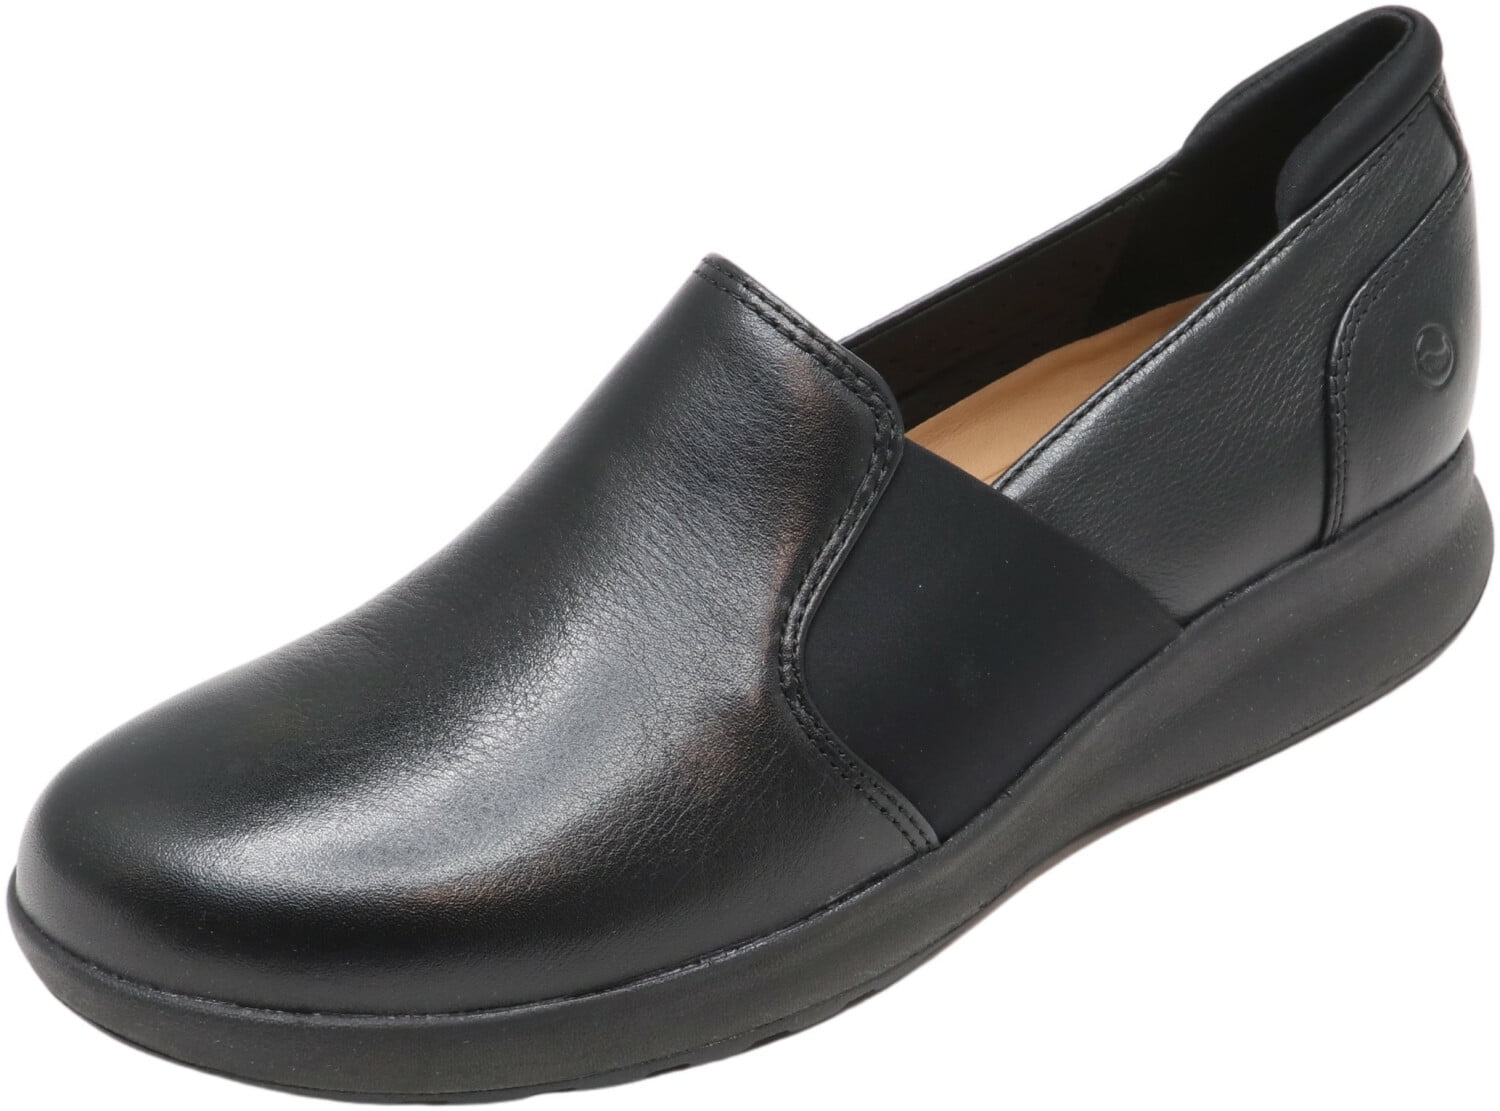 clarks slip resistant shoes womens